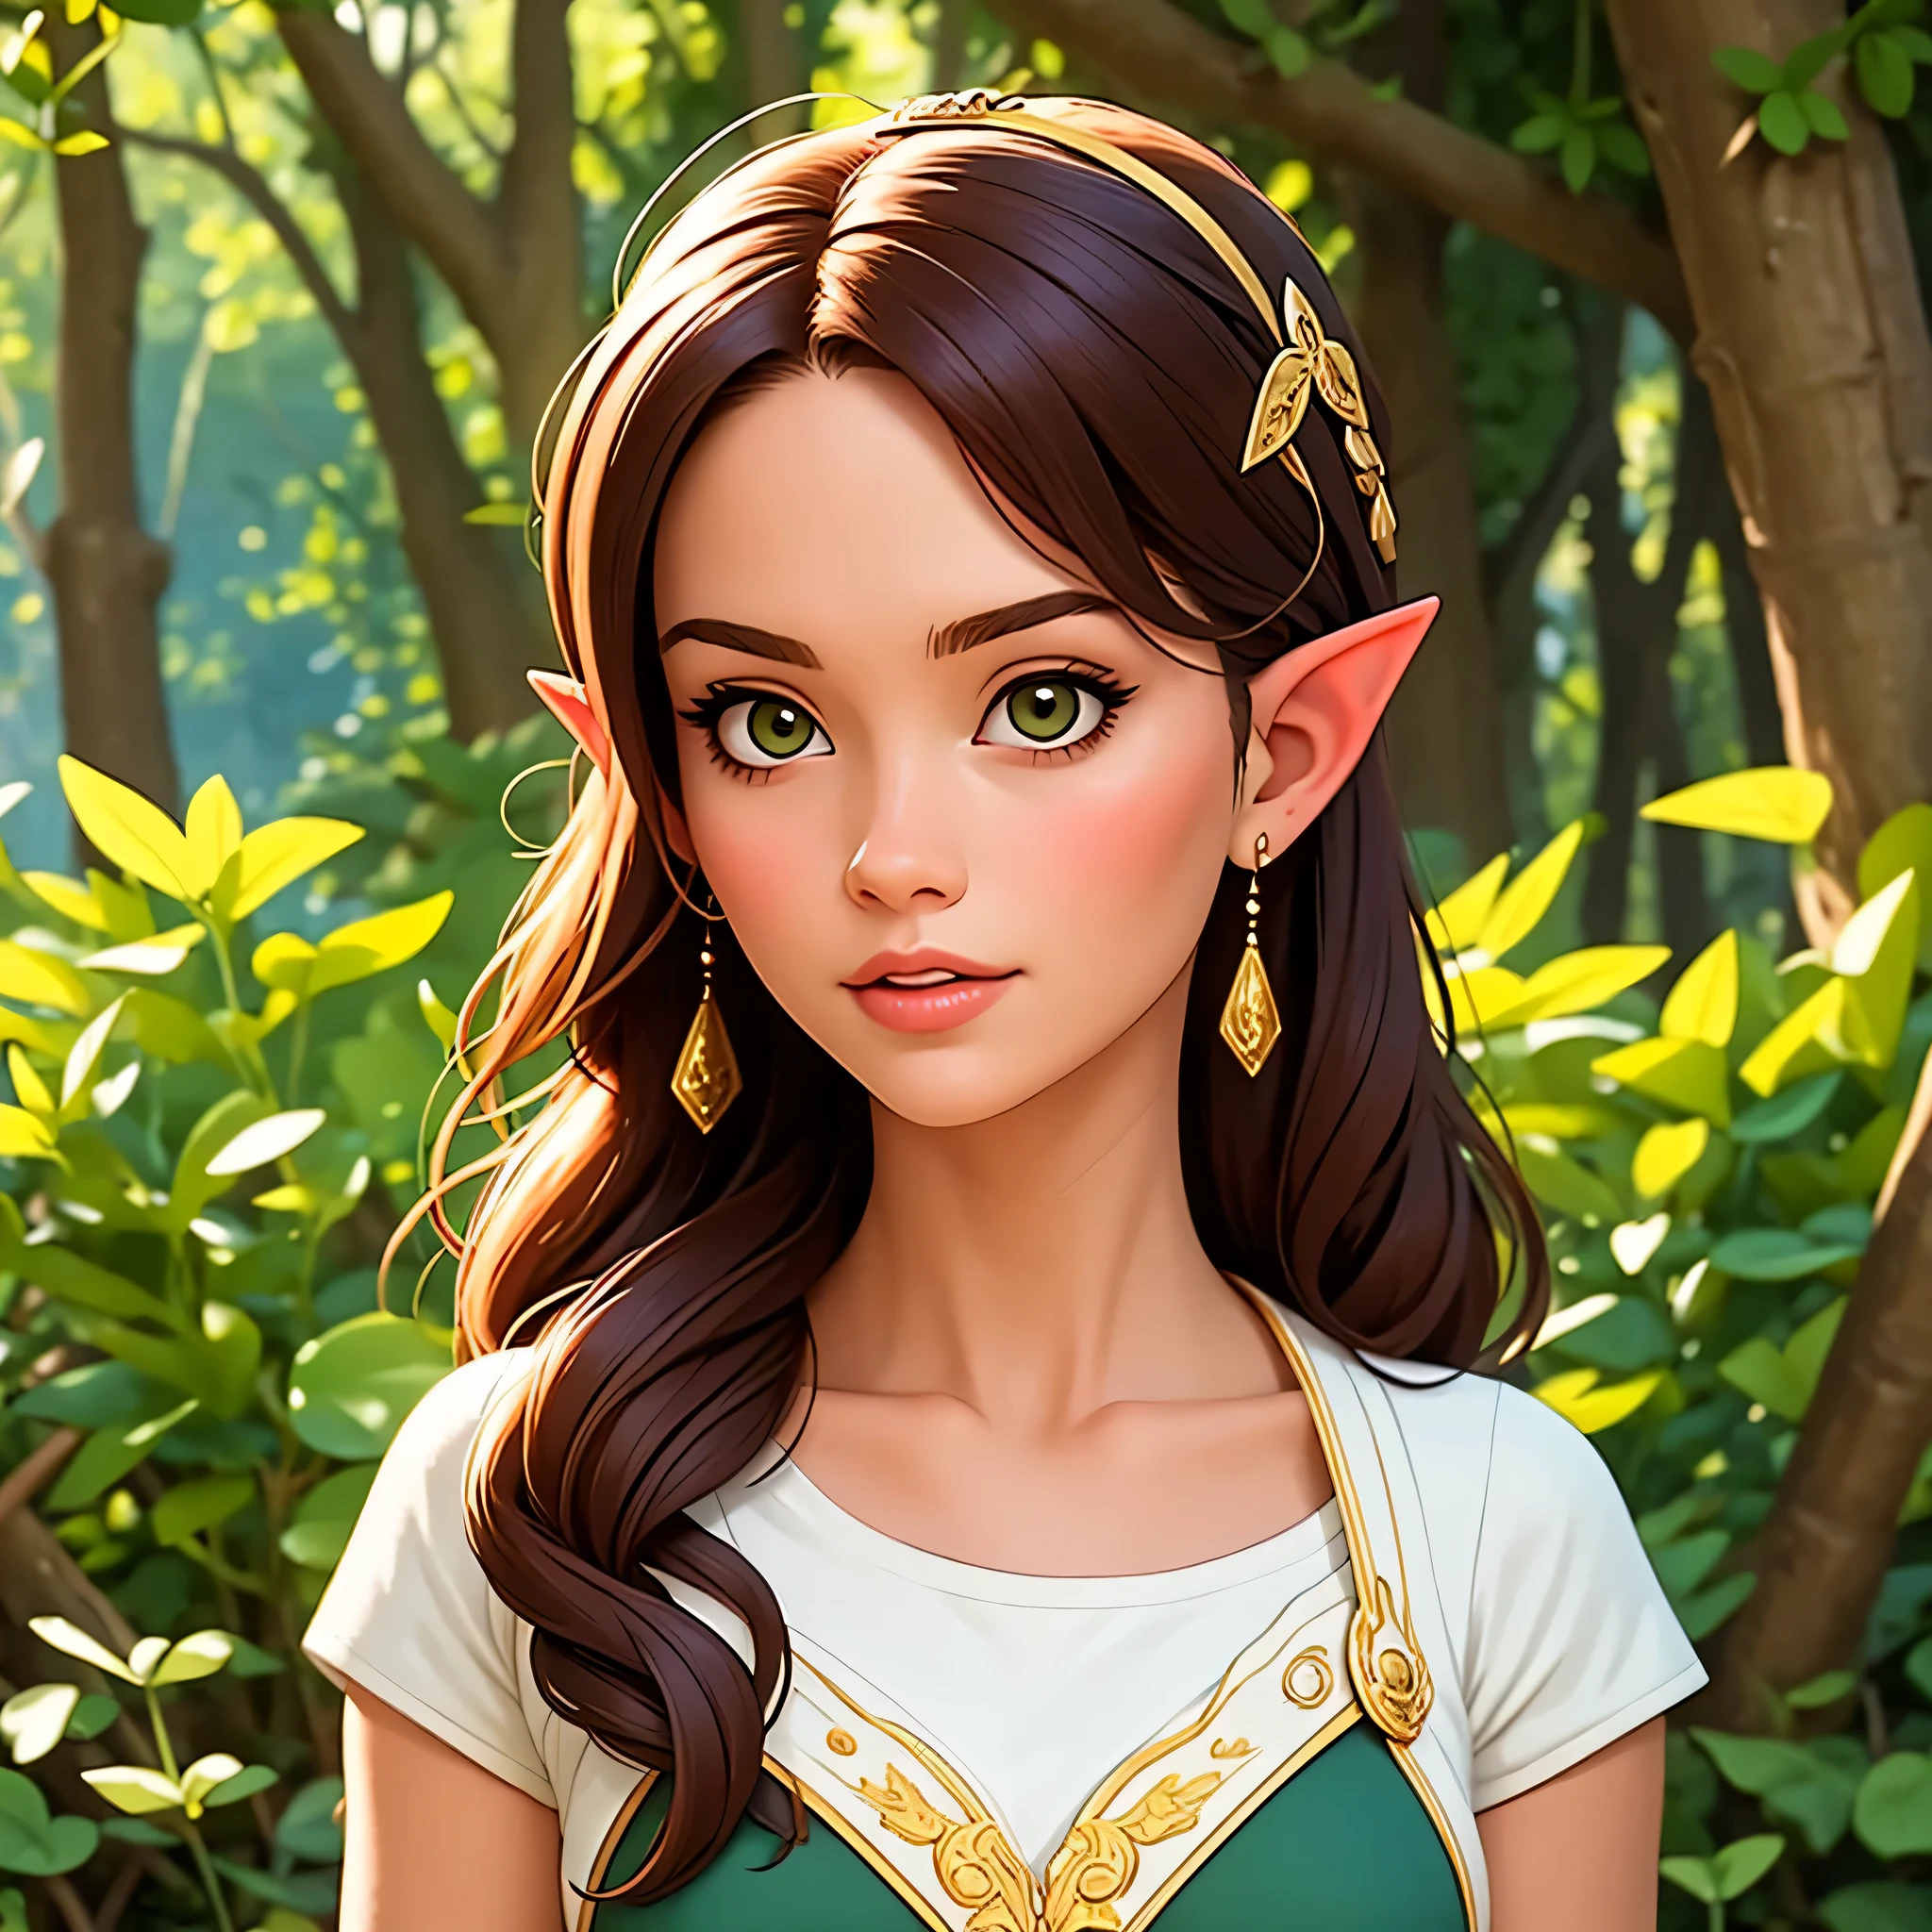 a close up of a elf girl with a green dress, elf girl, elf princess, very beautiful elven top model, hyperrealistic fantasy art, beautiful and elegant female elf, realistic fantasy render